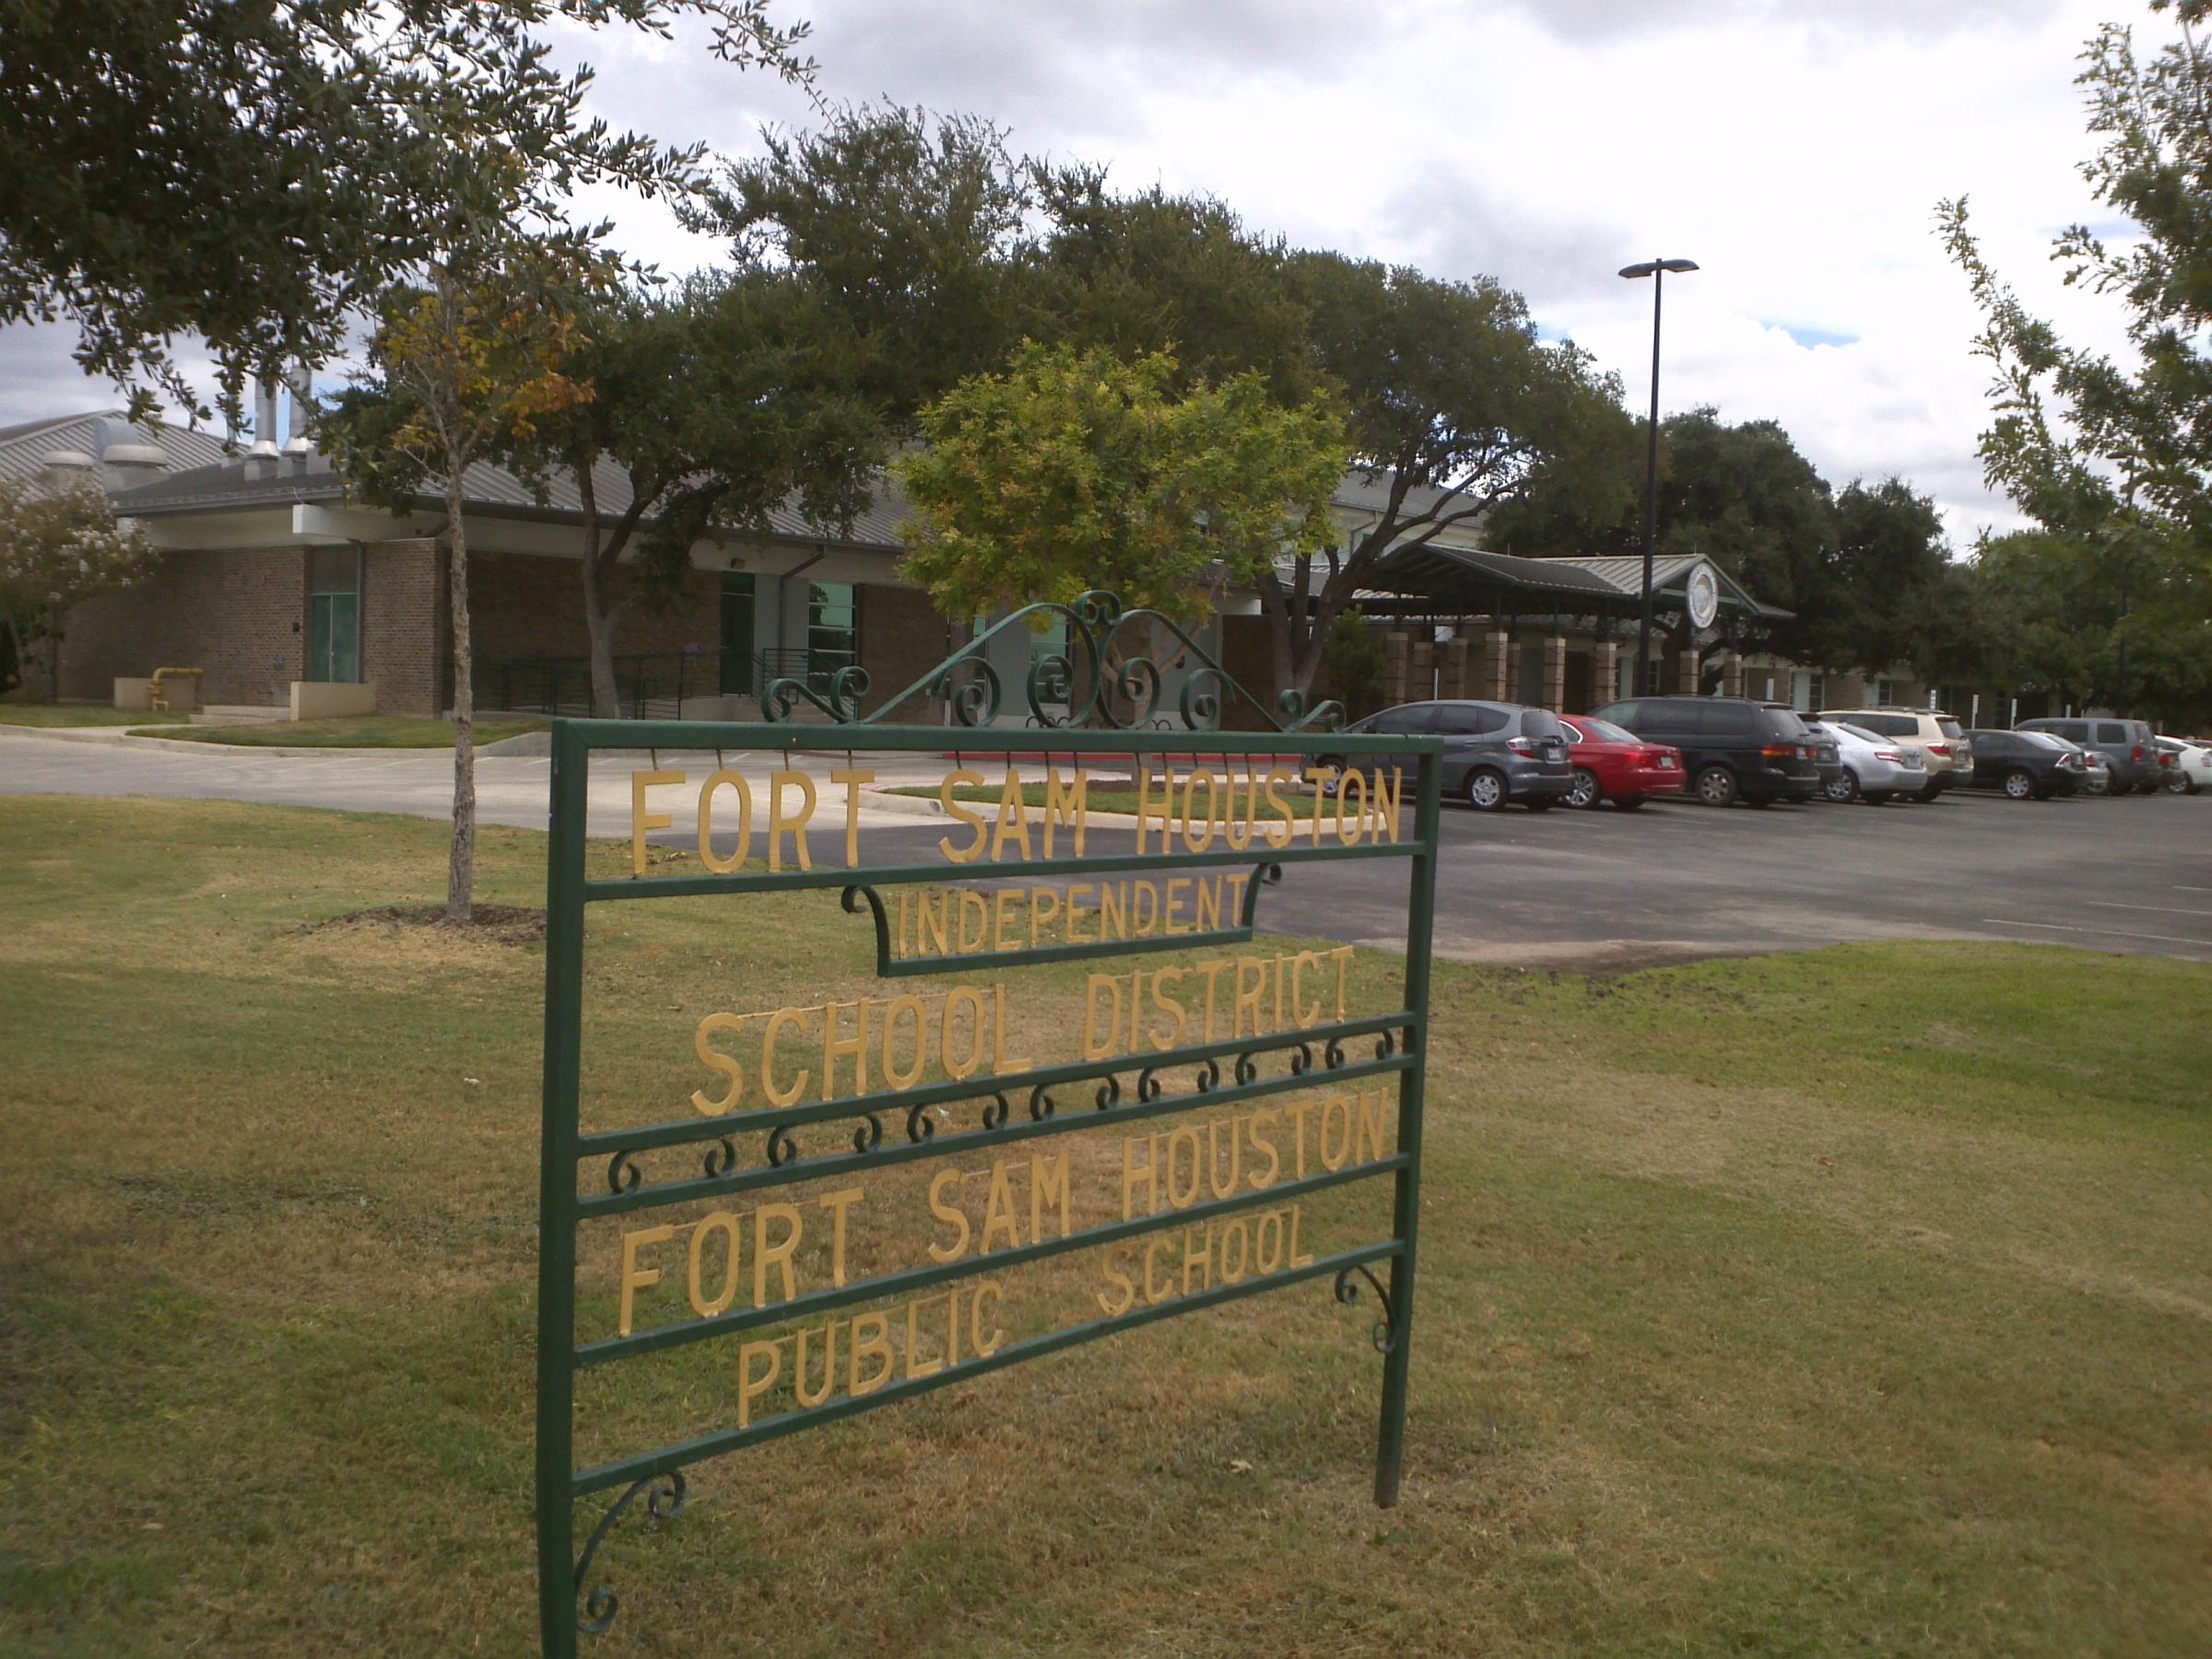 Fort_Sam_Houston_ISD_sign_military_schools_083013  